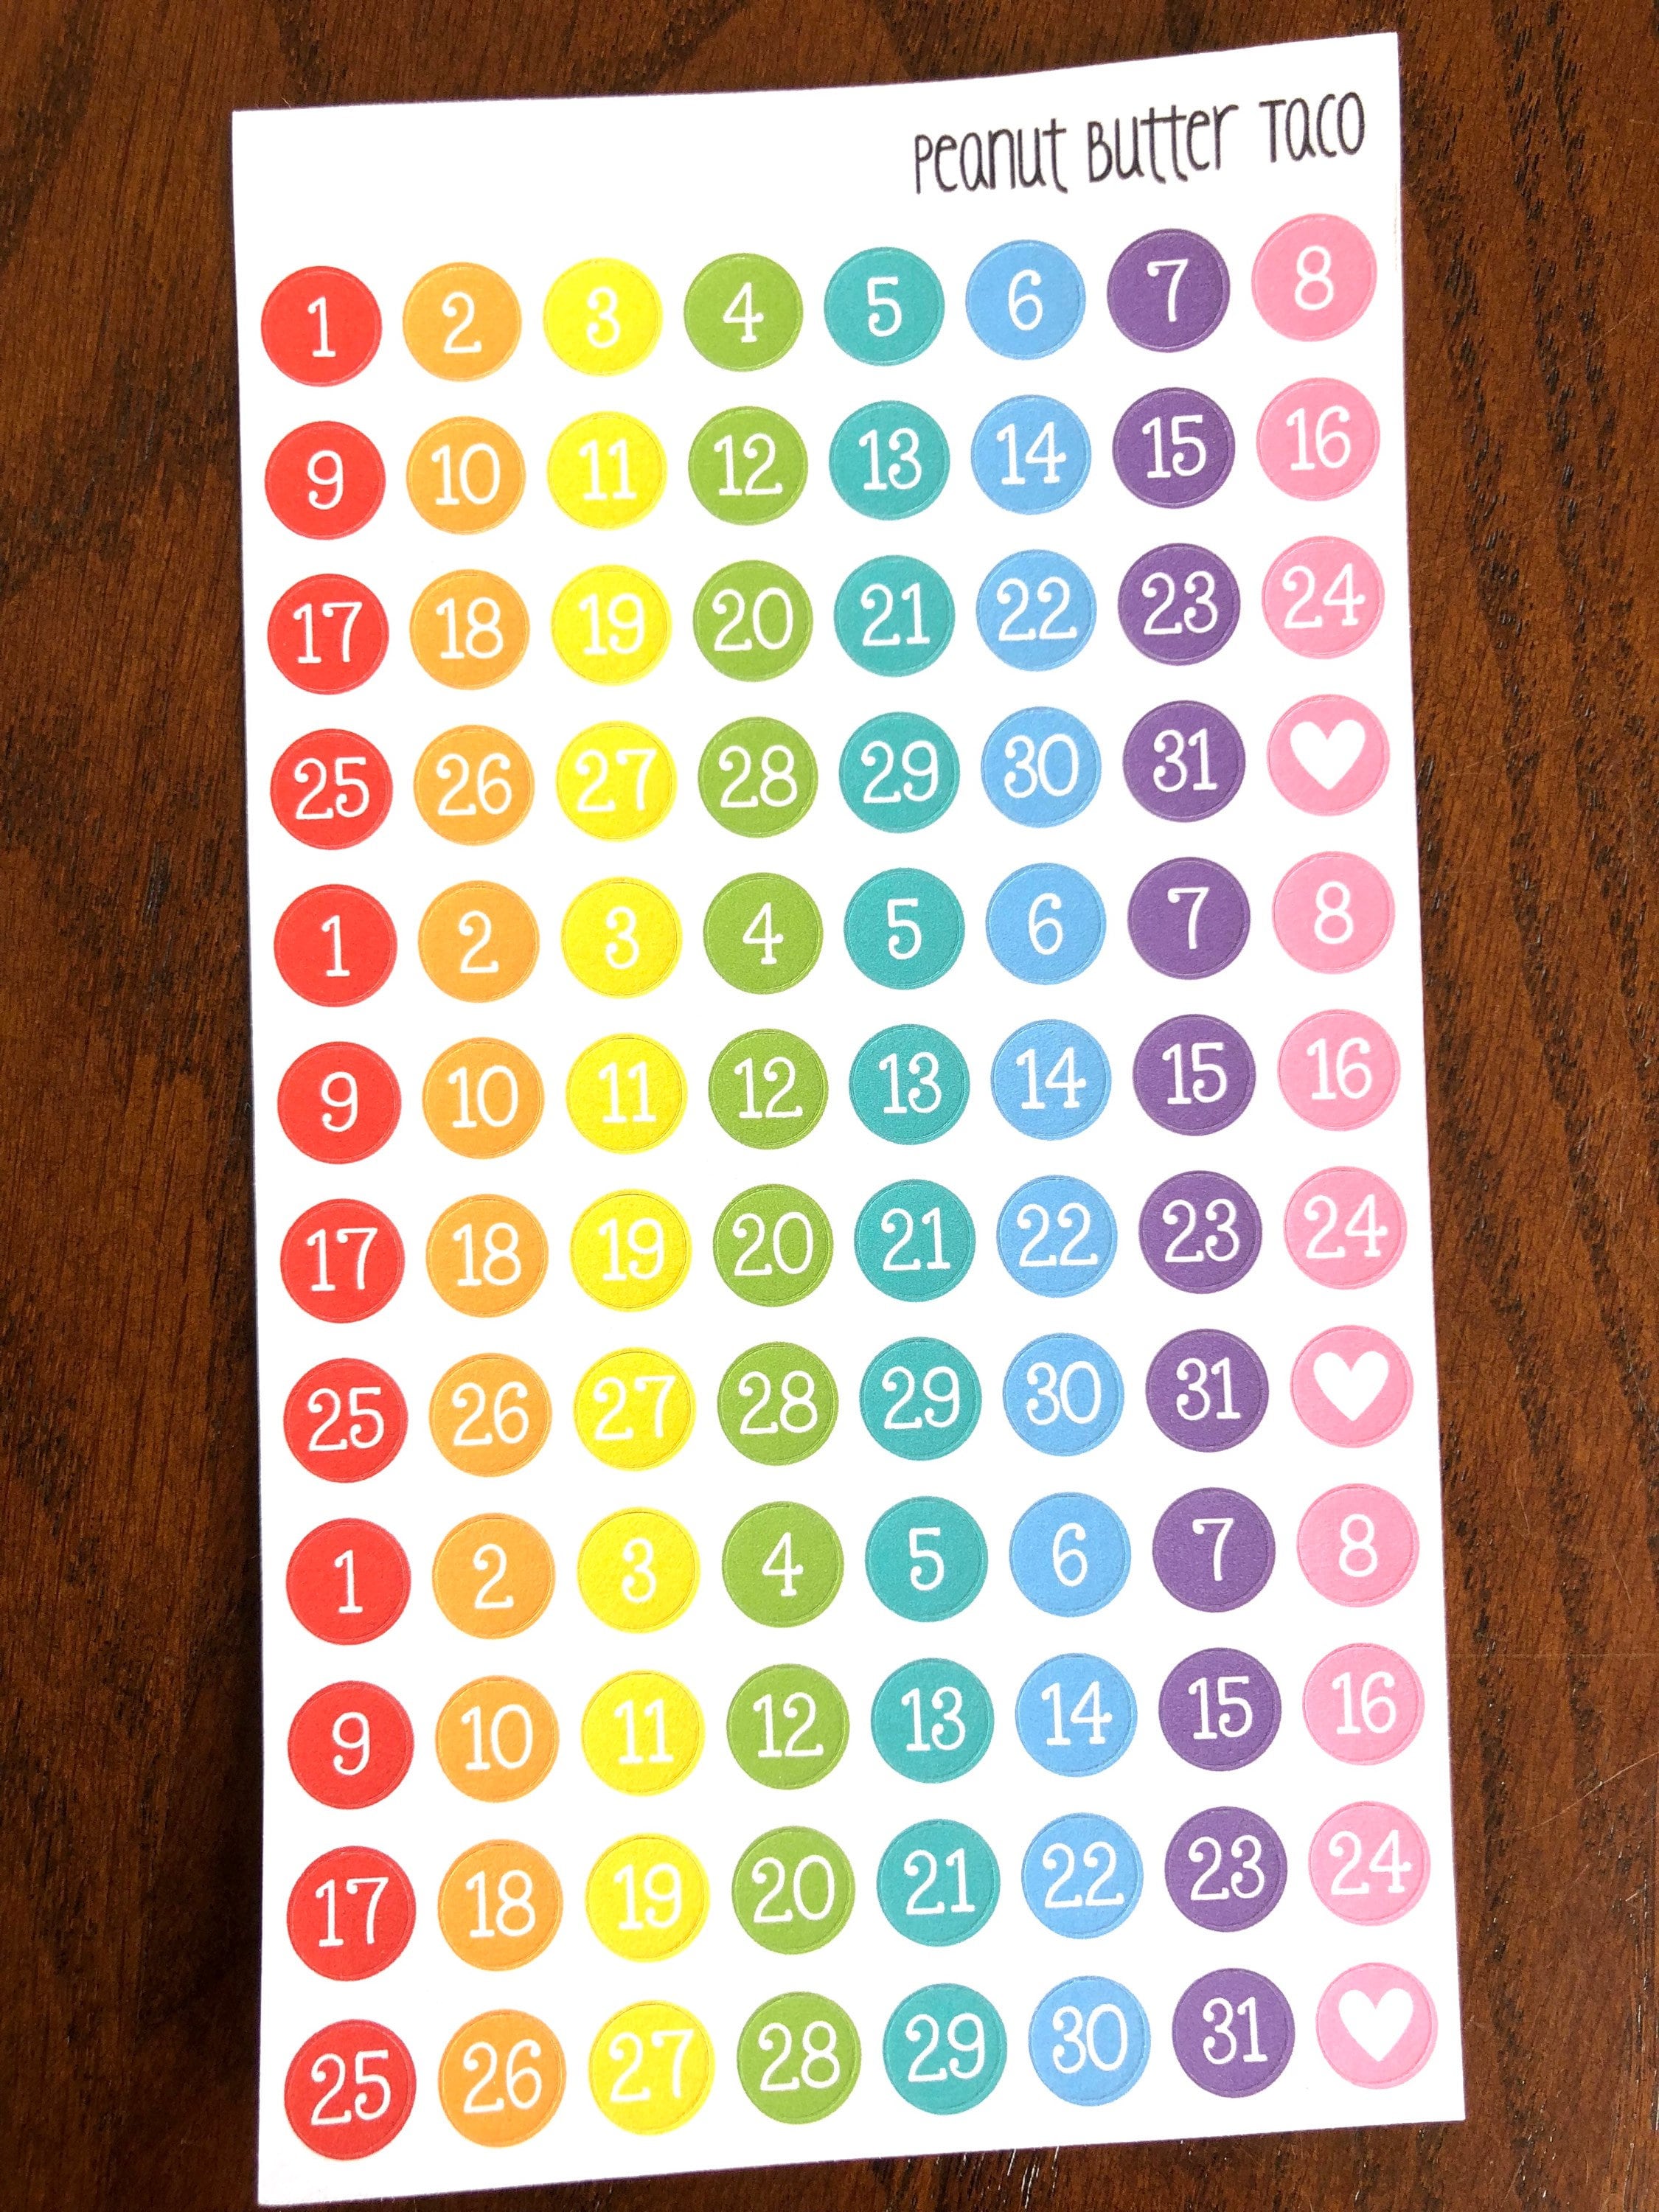 12 Monthly Planner Date Sticker Set, Calendar Number Date Stickers,  Decorative Planner Sticker for Customizing Undated Planners, Notebooks